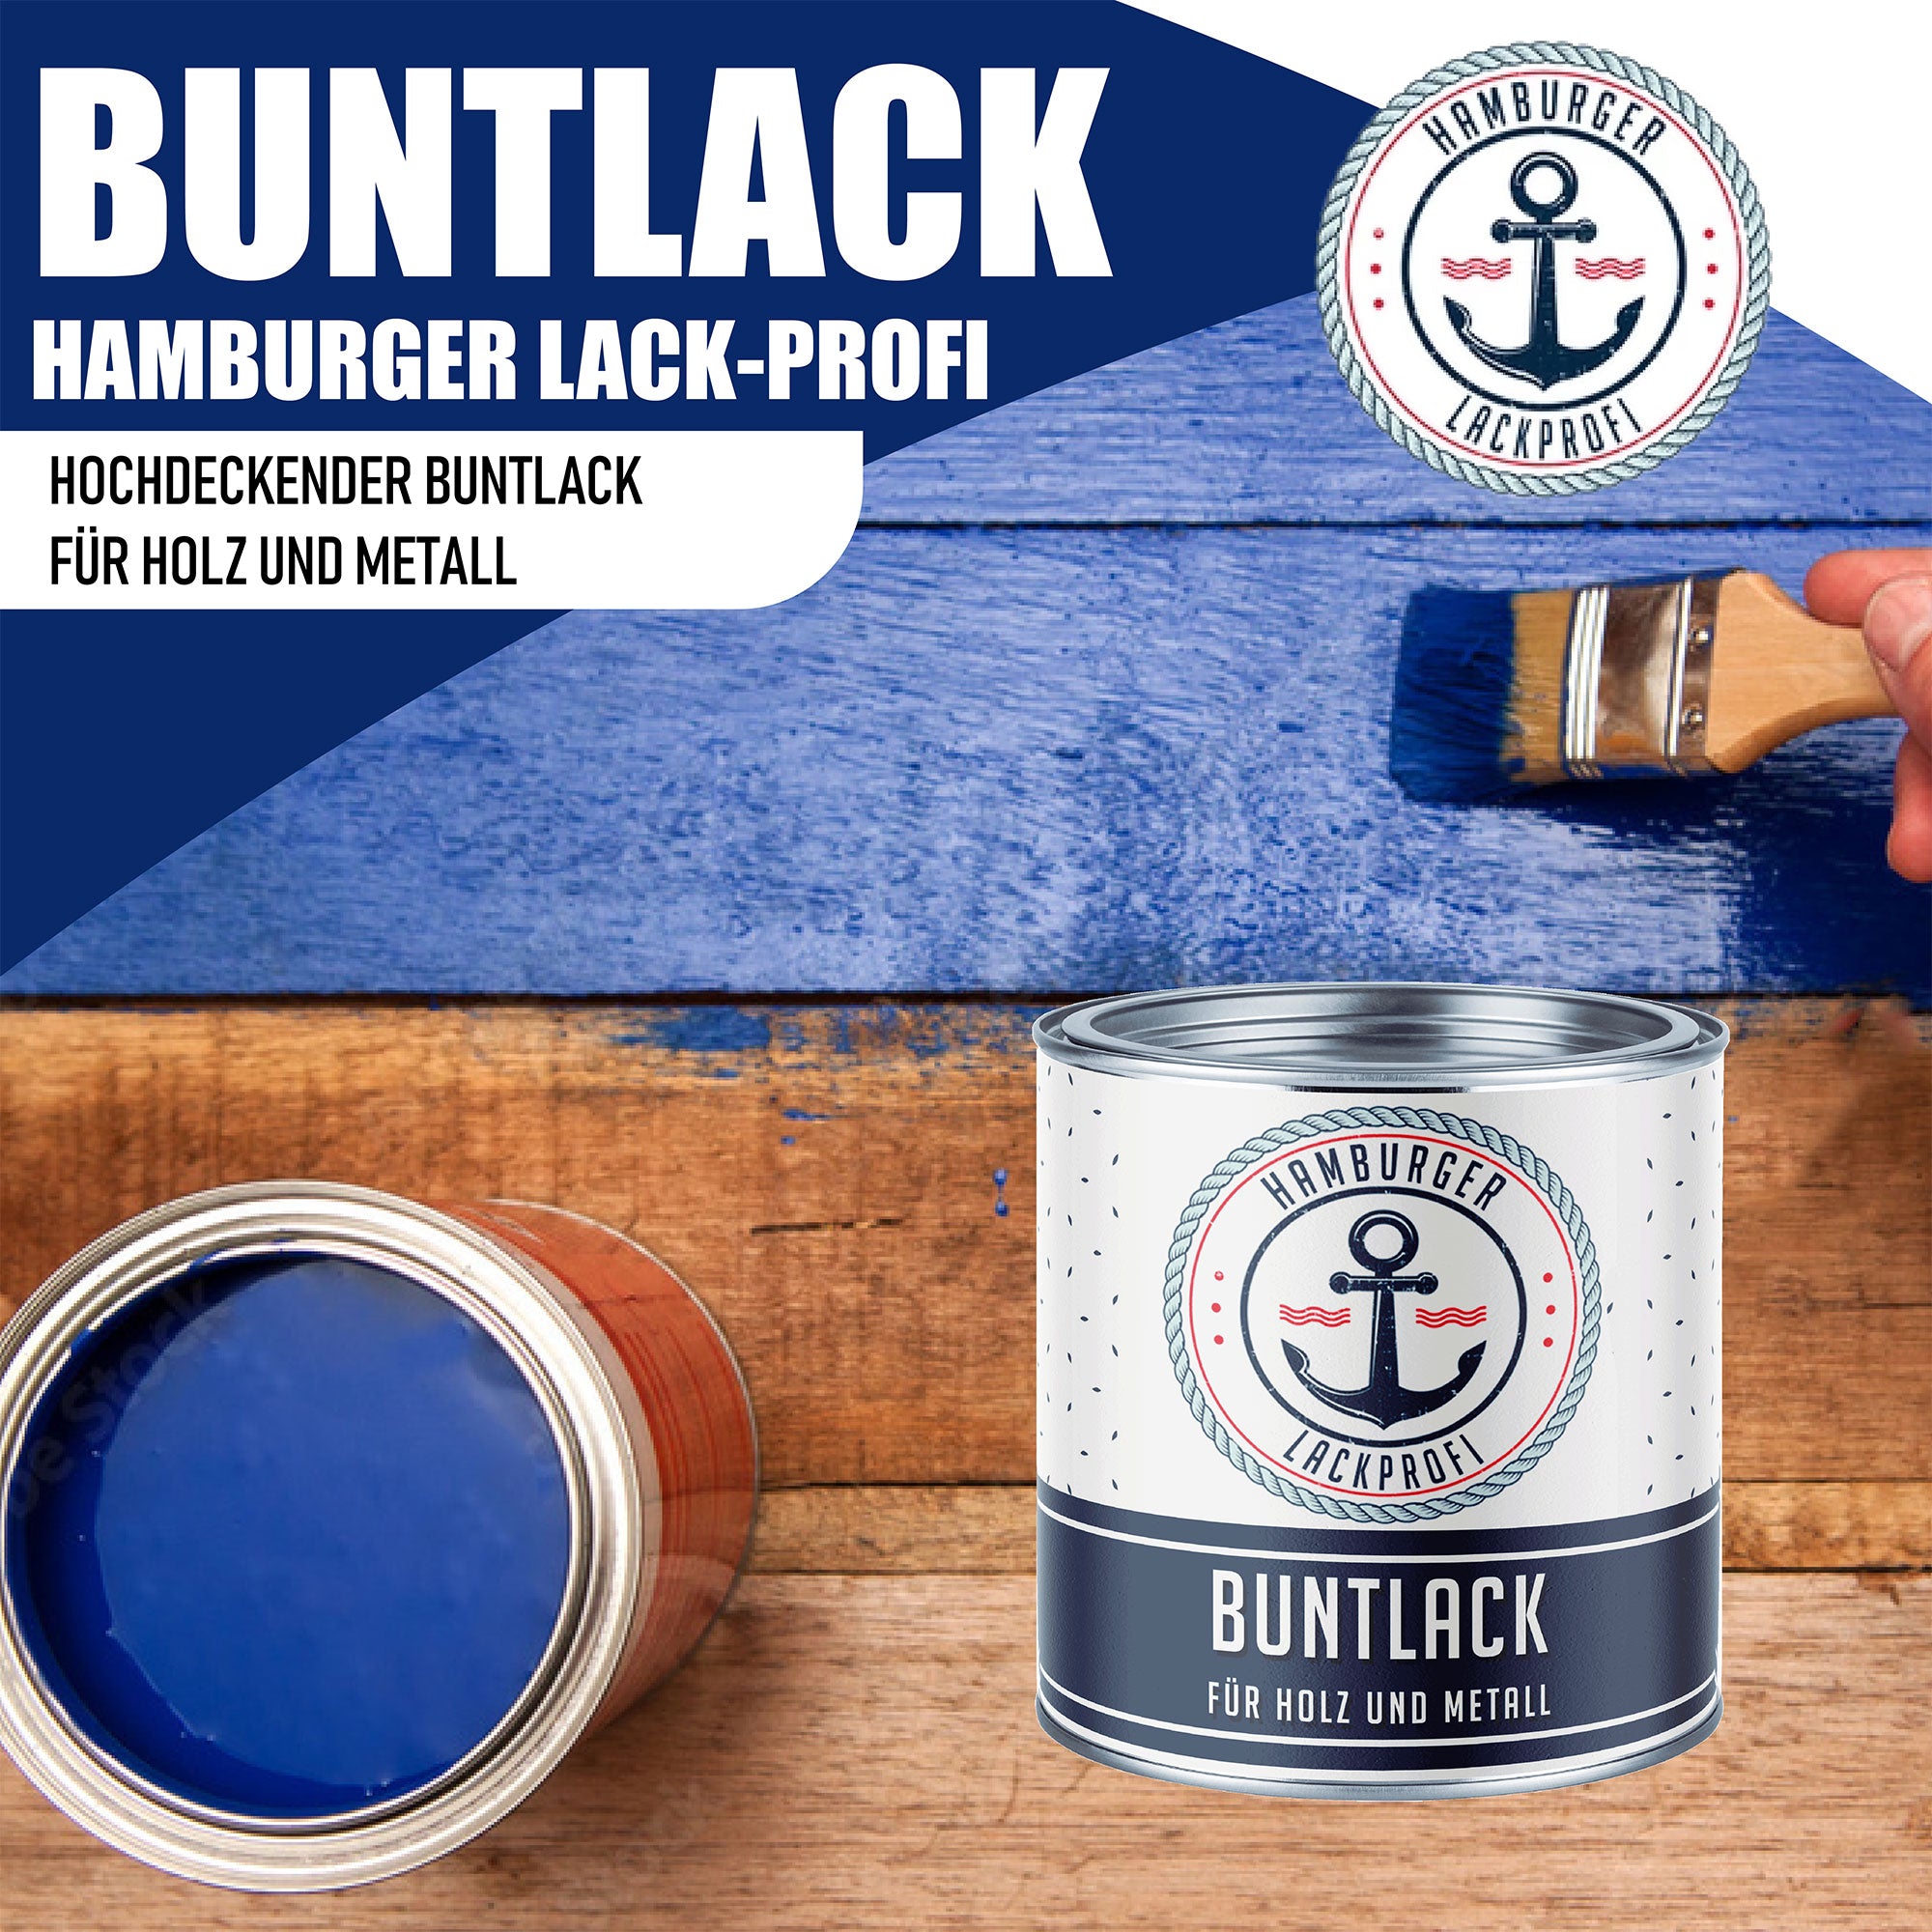 Hamburger Lack-Profi Buntlack Safrangelb RAL 1017 - Robuster Kunstharzlack